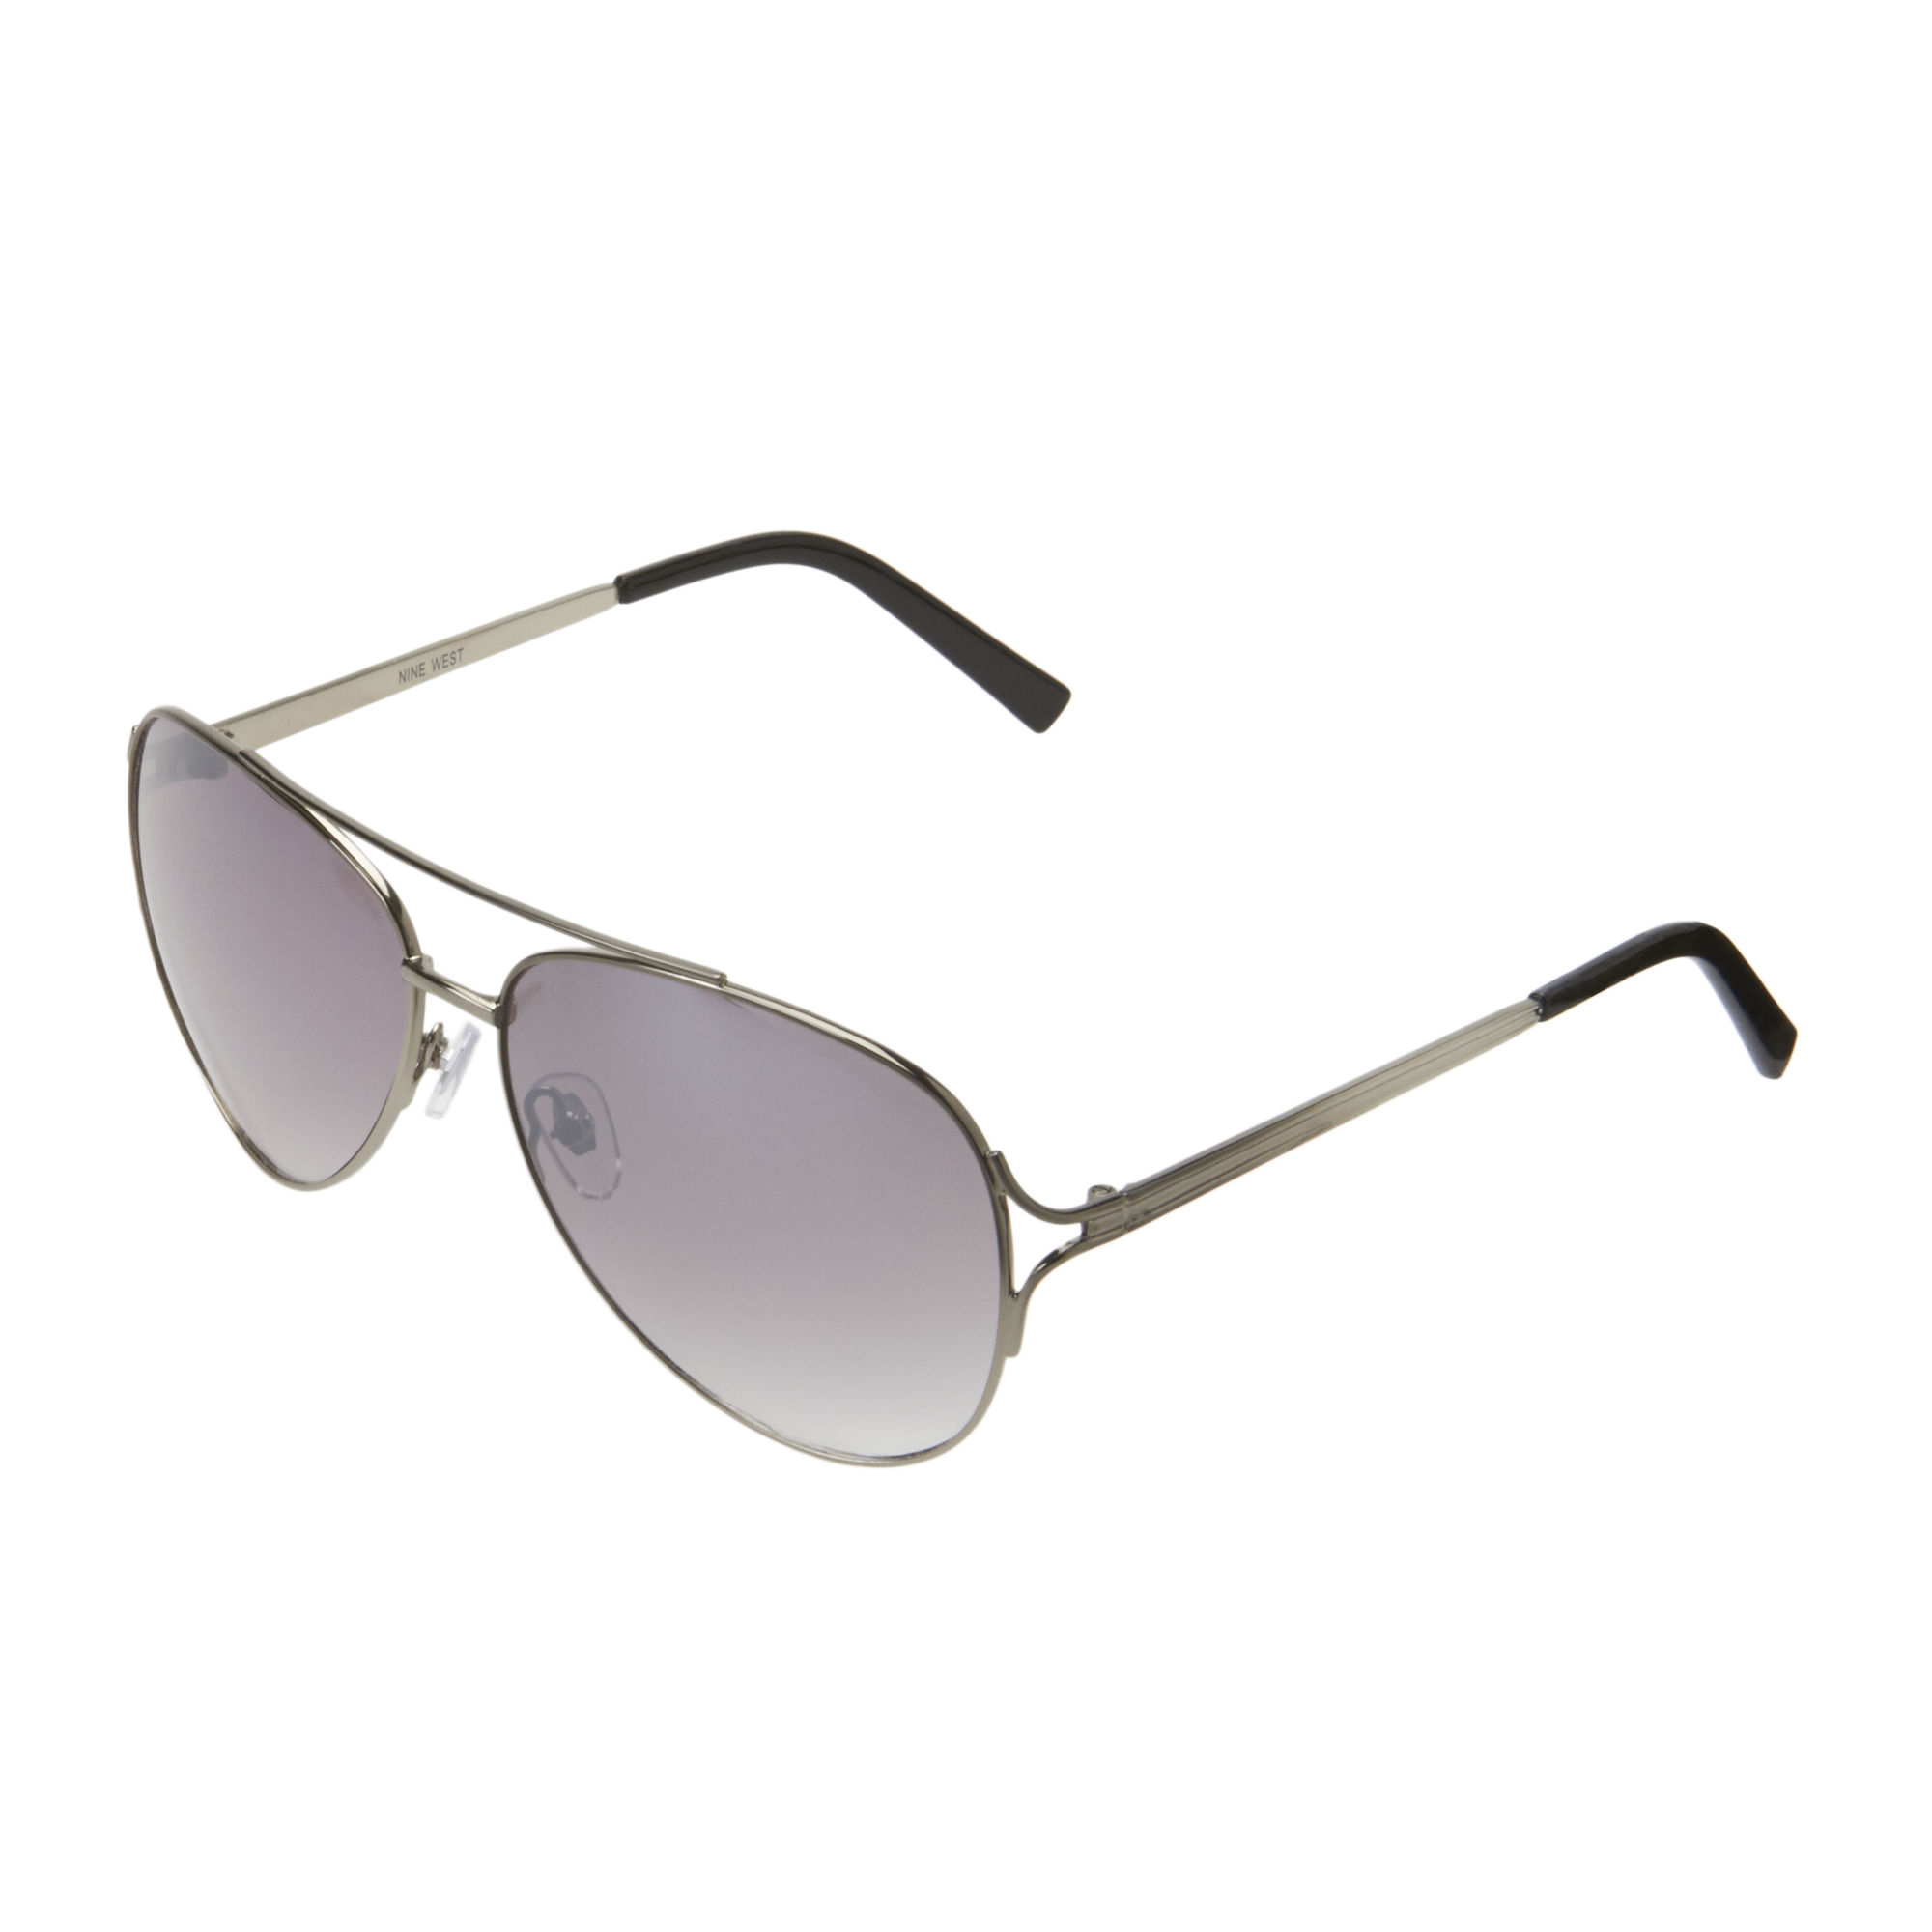 Nine West Aviator Sunglasses in Metallic - Lyst